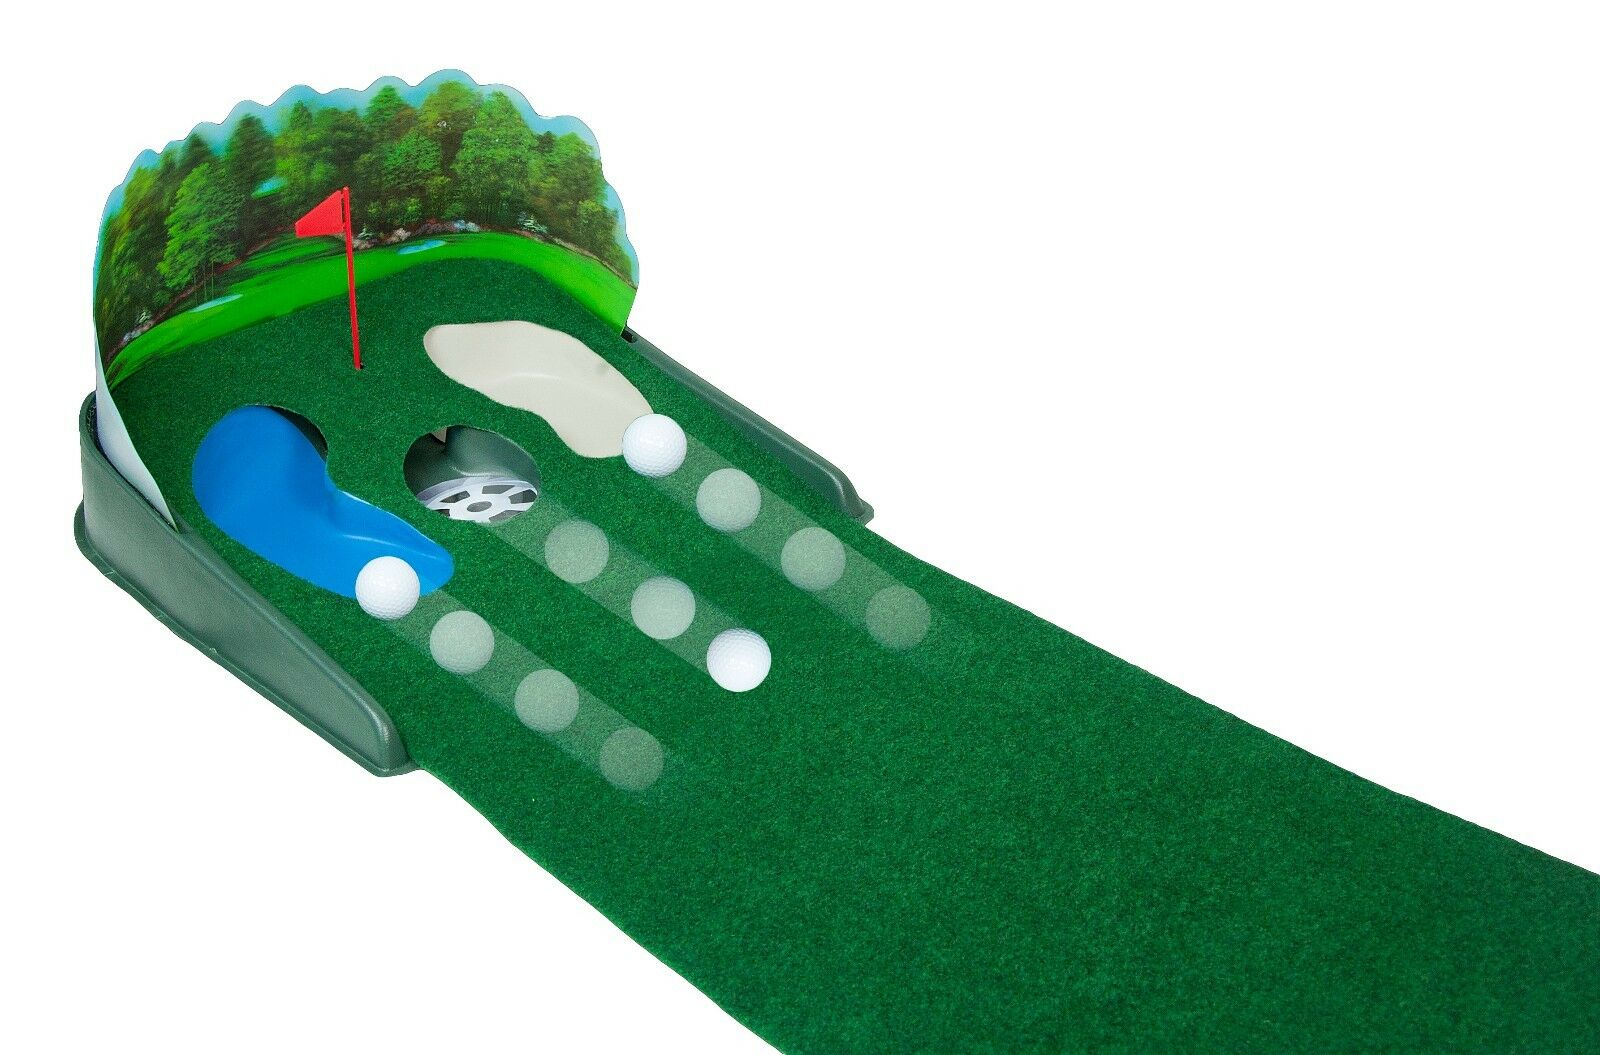 Put N Hazard Electric Automatic Return Golf Putting Practice Mat Green